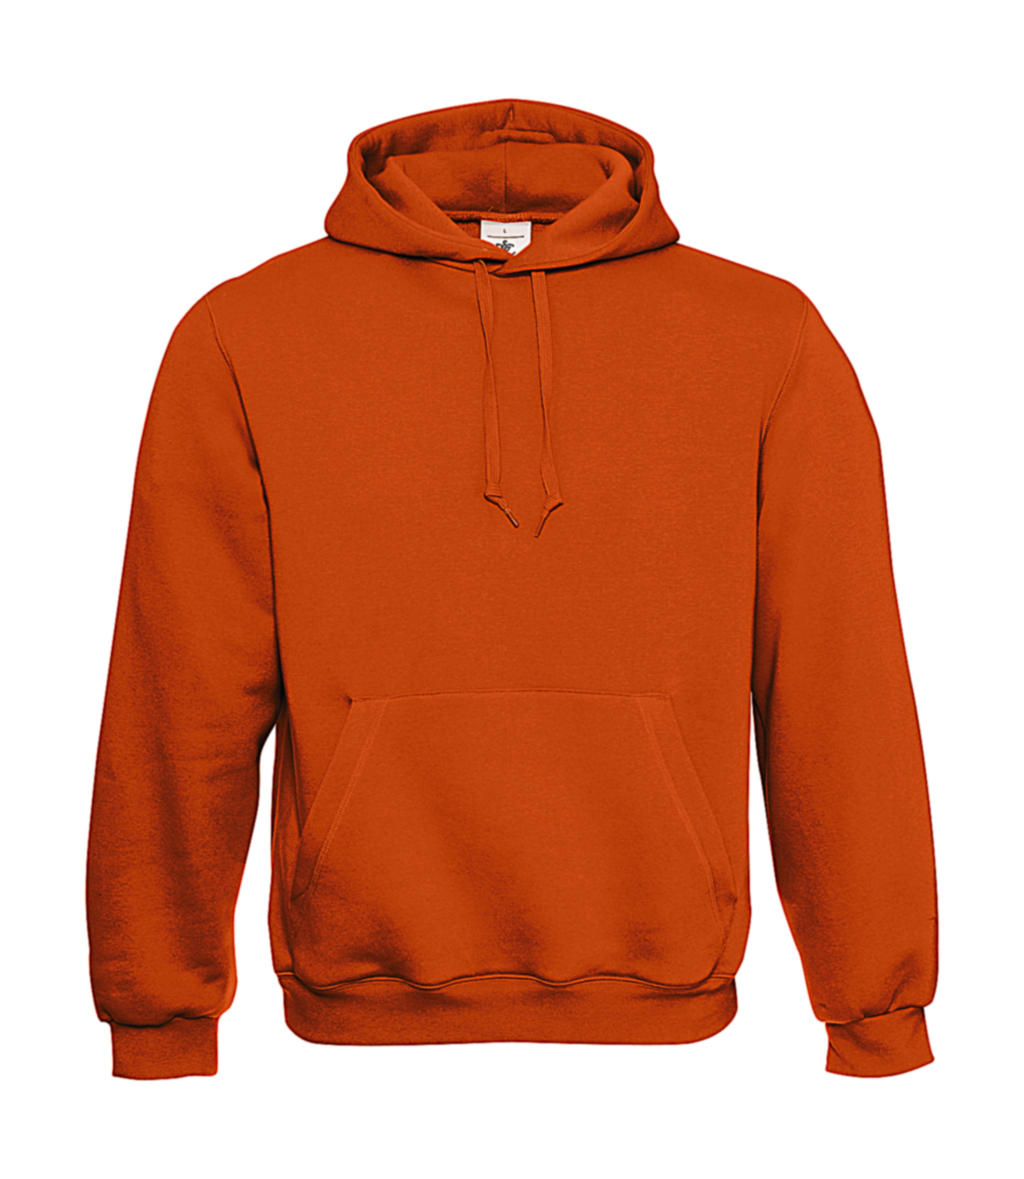  Hooded Sweatshirt in Farbe Urban Orange